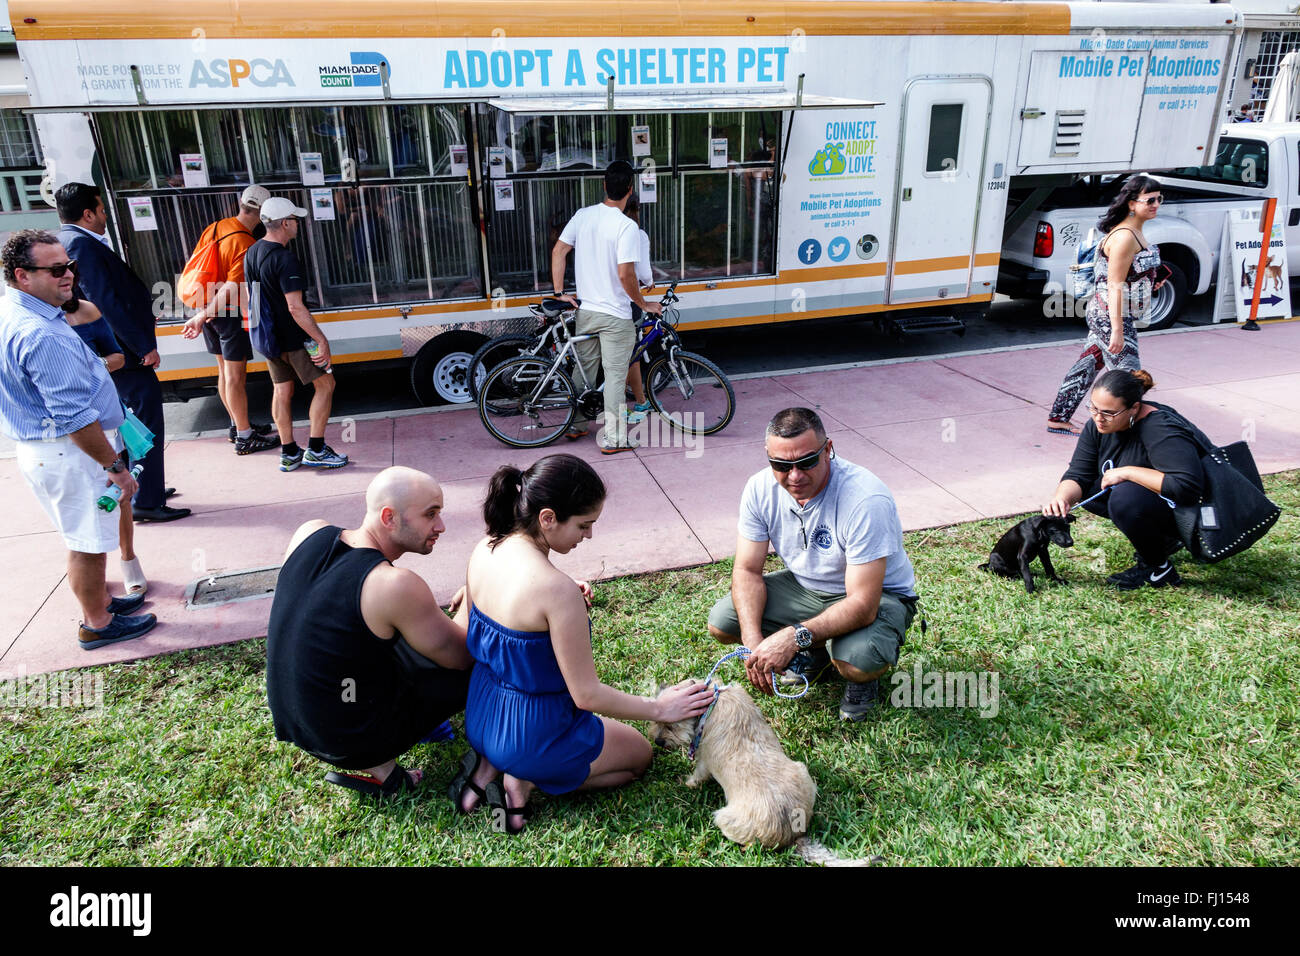 Miami Beach Florida,mobile adopt animal shelter pet,trailer,adopting,adult,adults,man men male,woman female women,couple,looking,ASPCA,dog,dogs,FL1601 Stock Photo